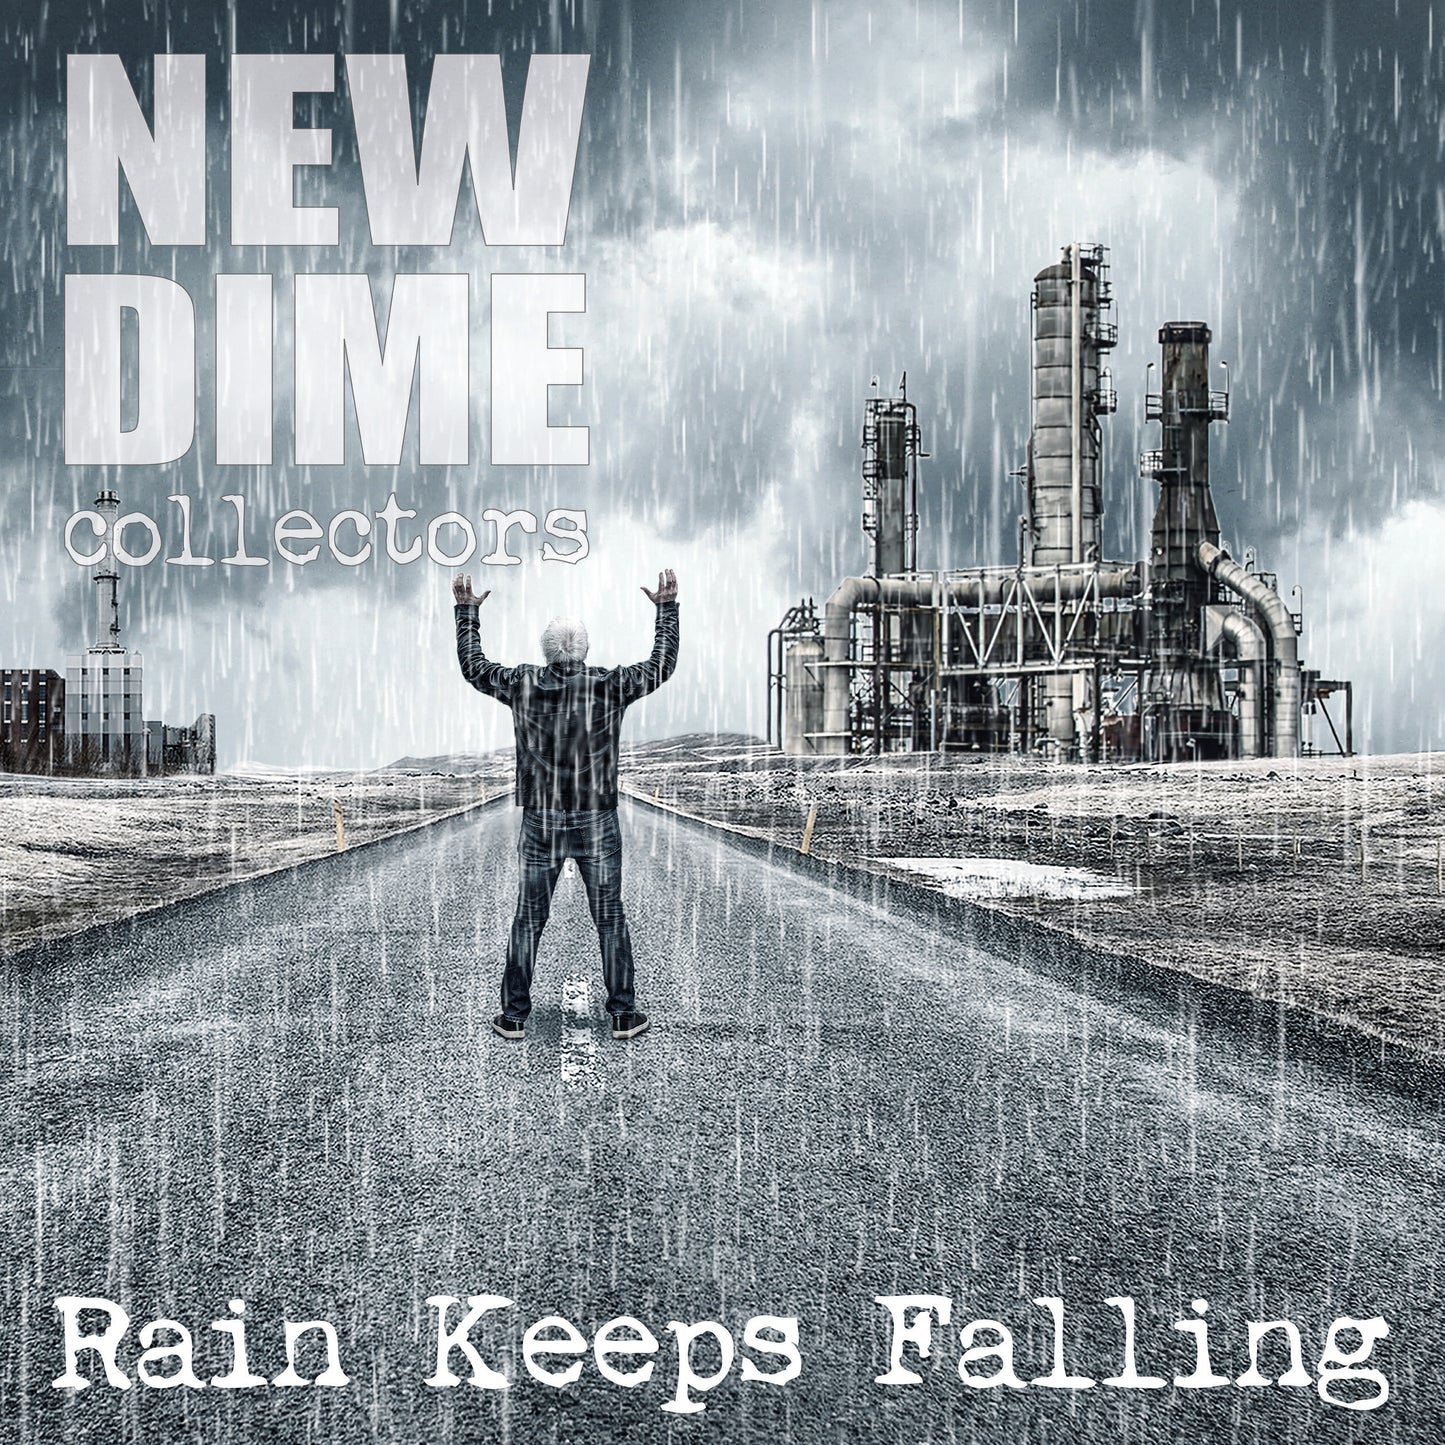 New Dime Collectors – Rain Keeps Falling